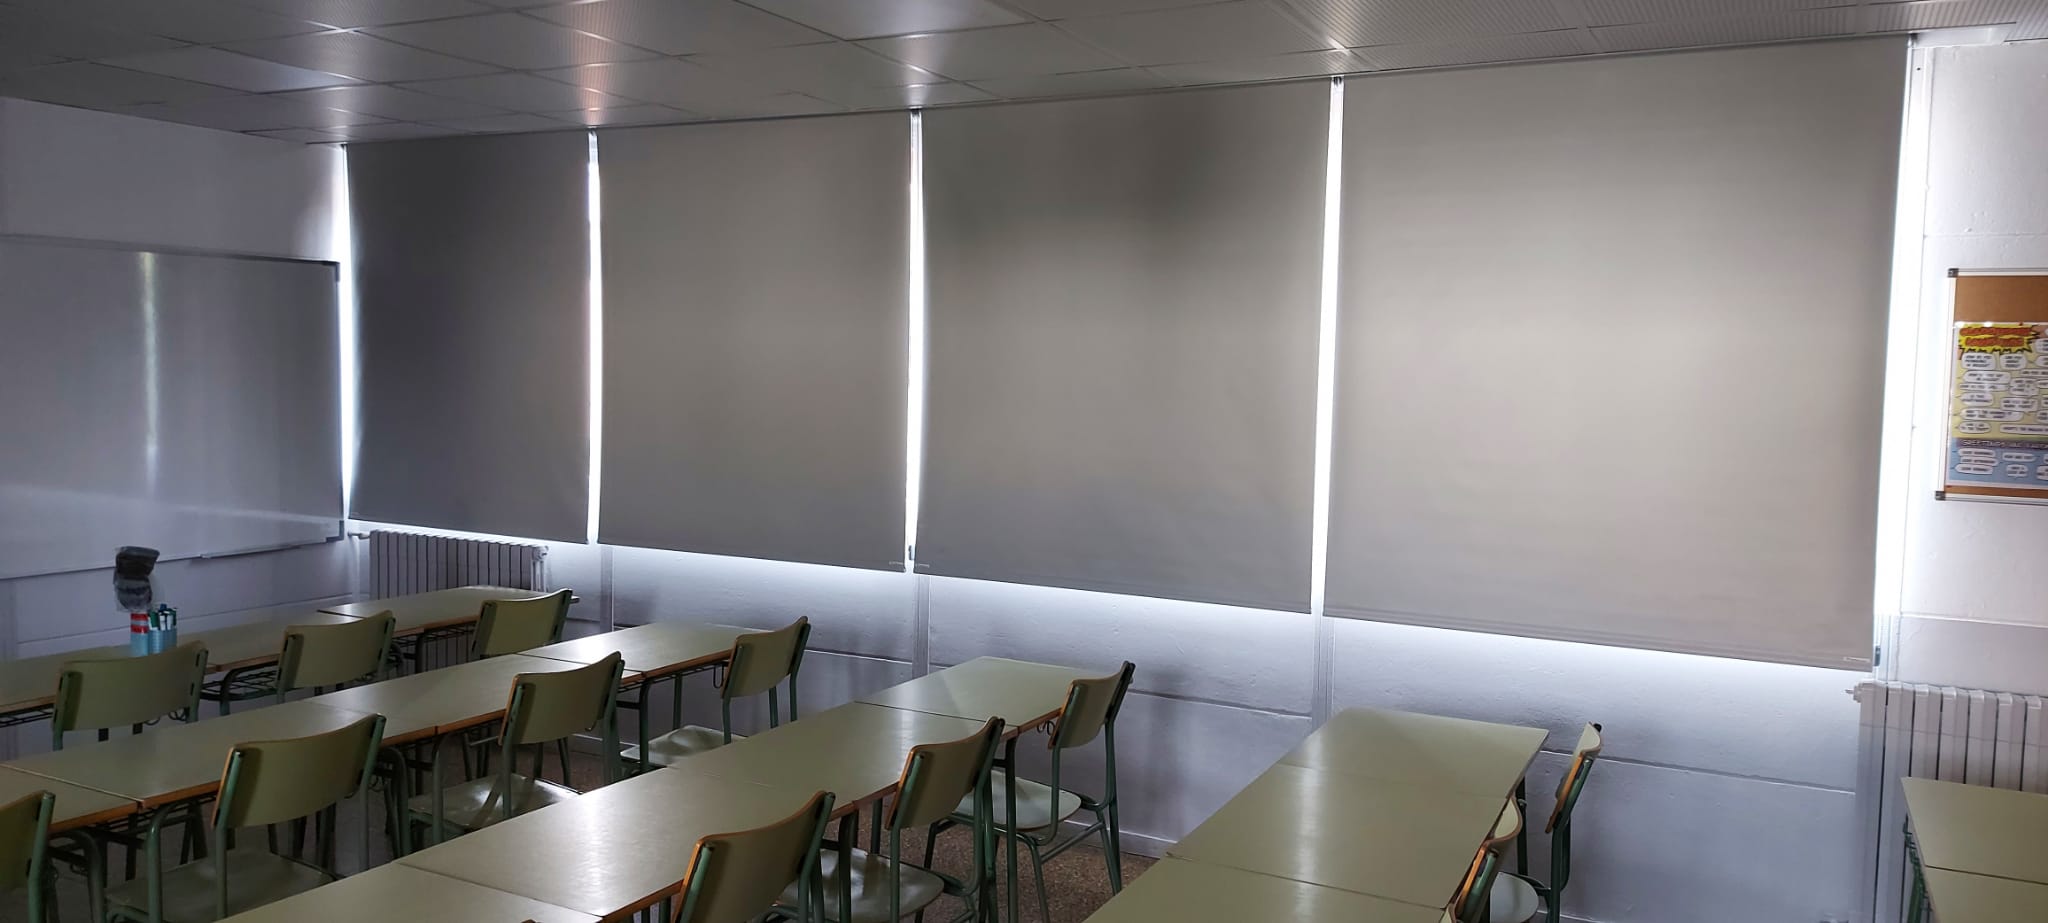 cortinas enrollables opacas de color gris en aula de escuela